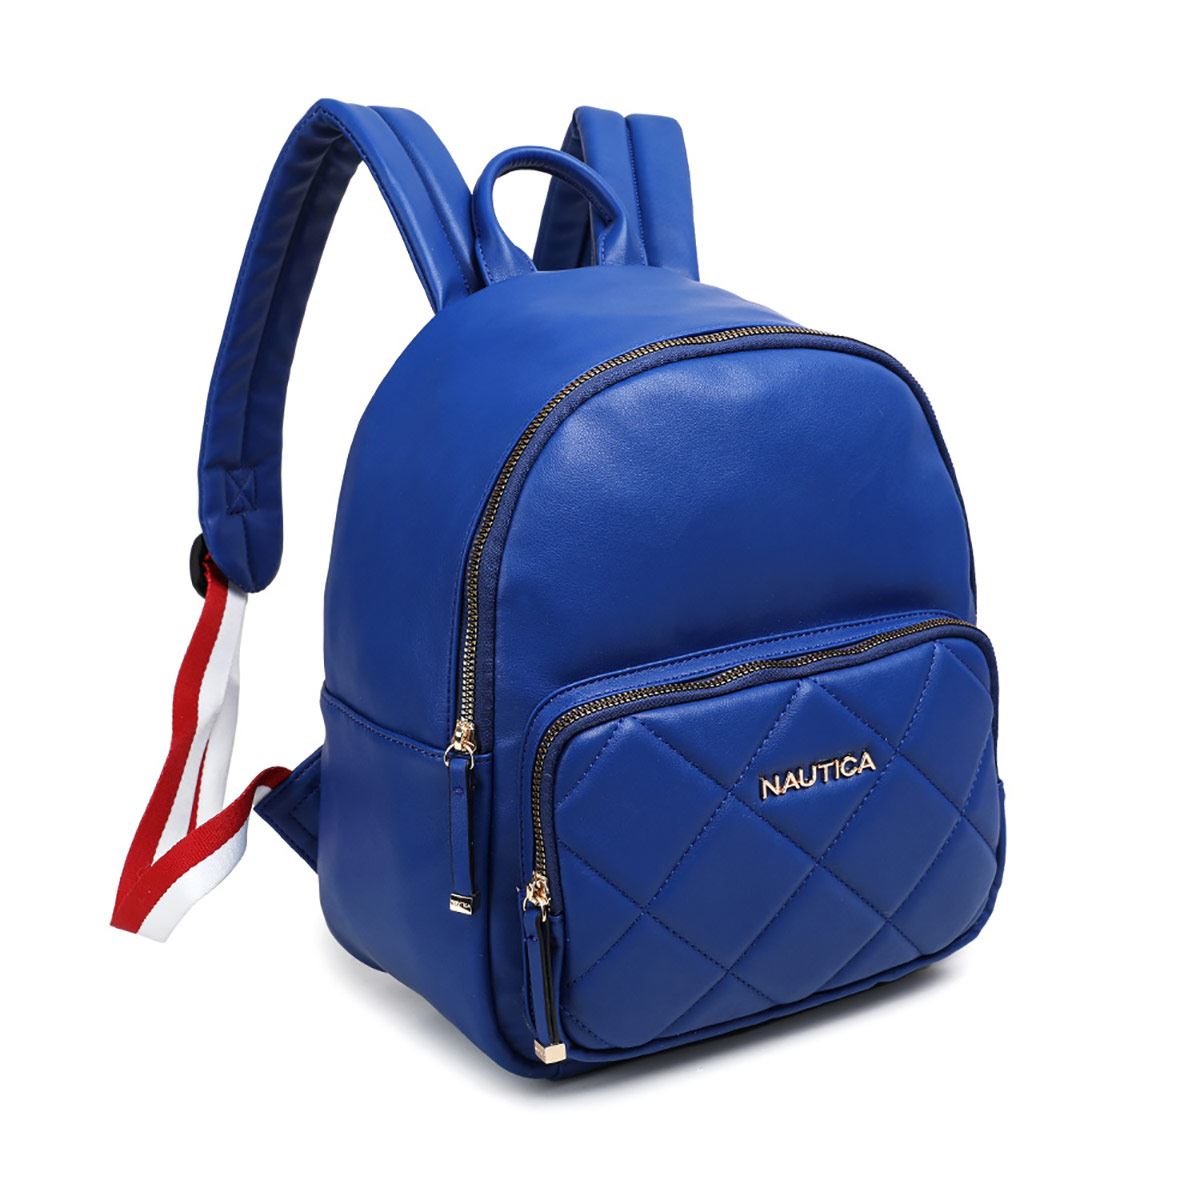 Mochila azul backpack Colors OSS